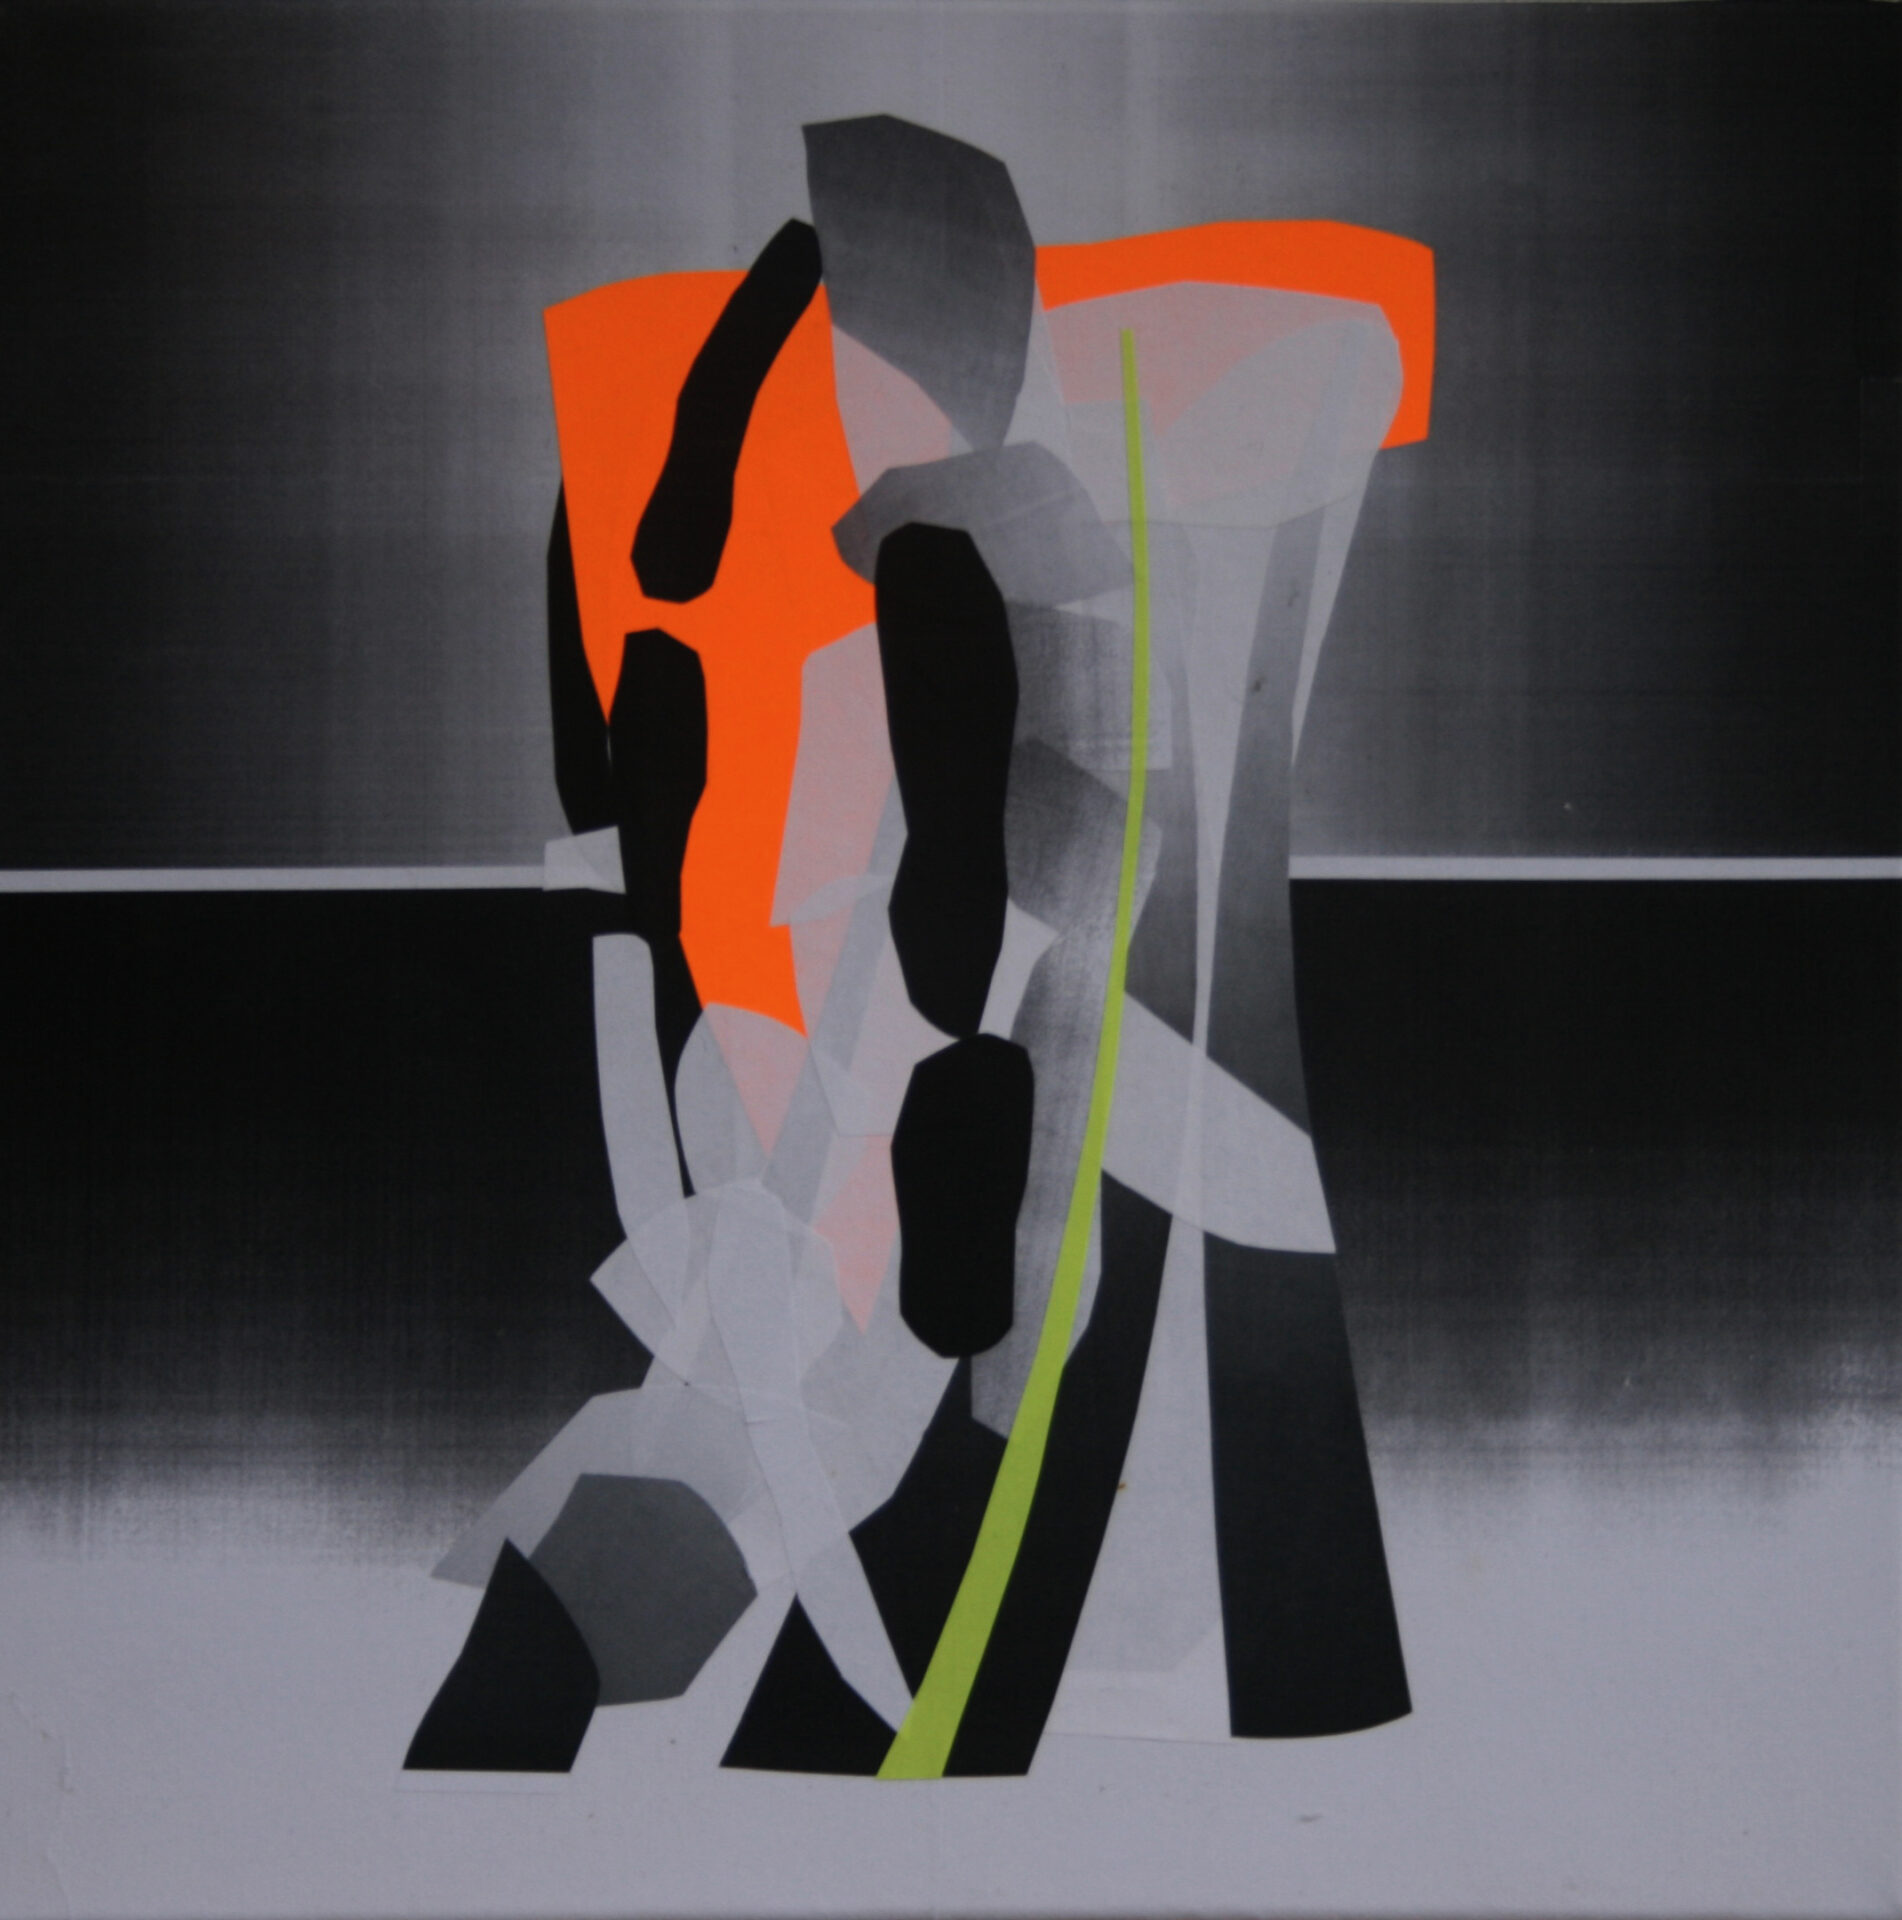 Daniel Beer, INFINITE ACTION on paper, 19-02, 40 x 40 cm, Papier auf Leinwand, 2019